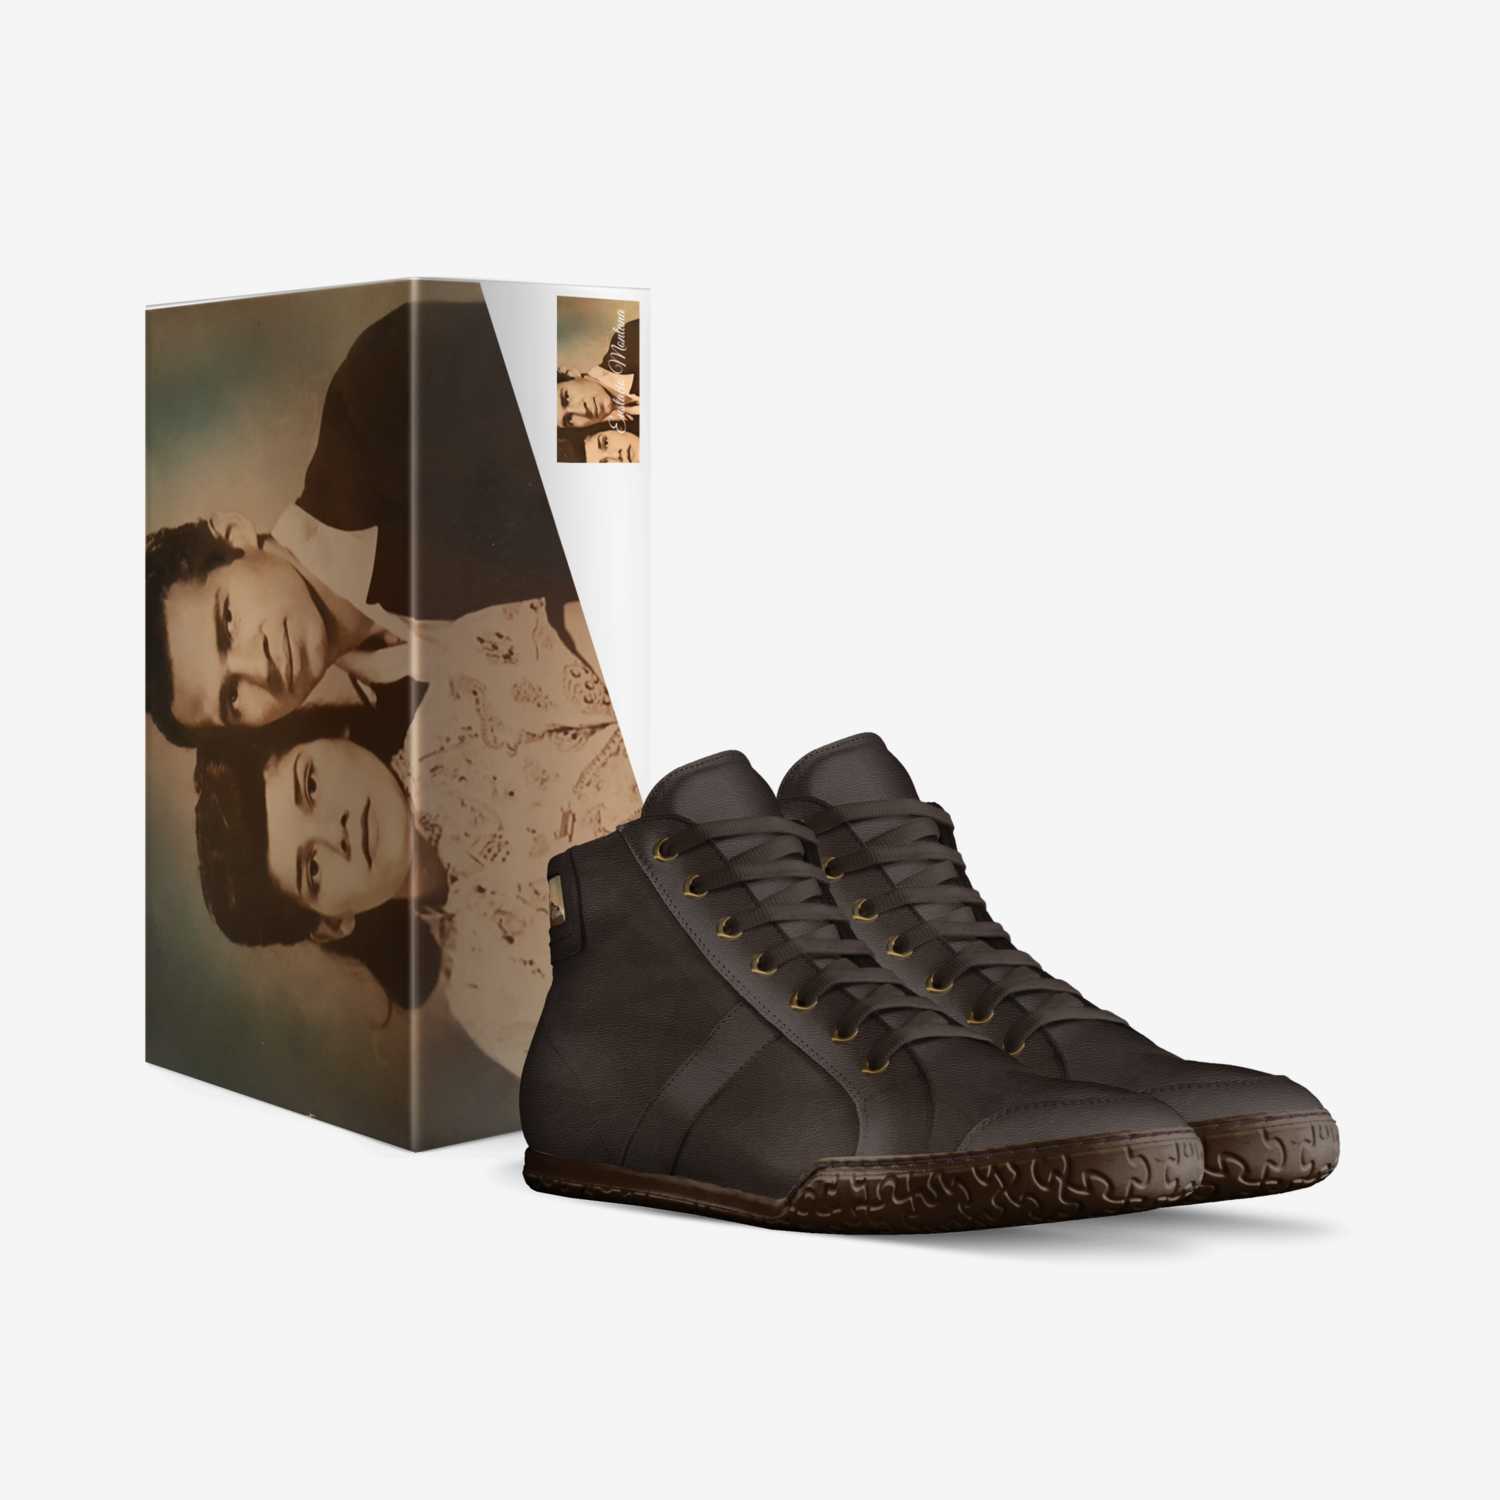 Eustacio Montana custom made in Italy shoes by David Lawrence | Box view